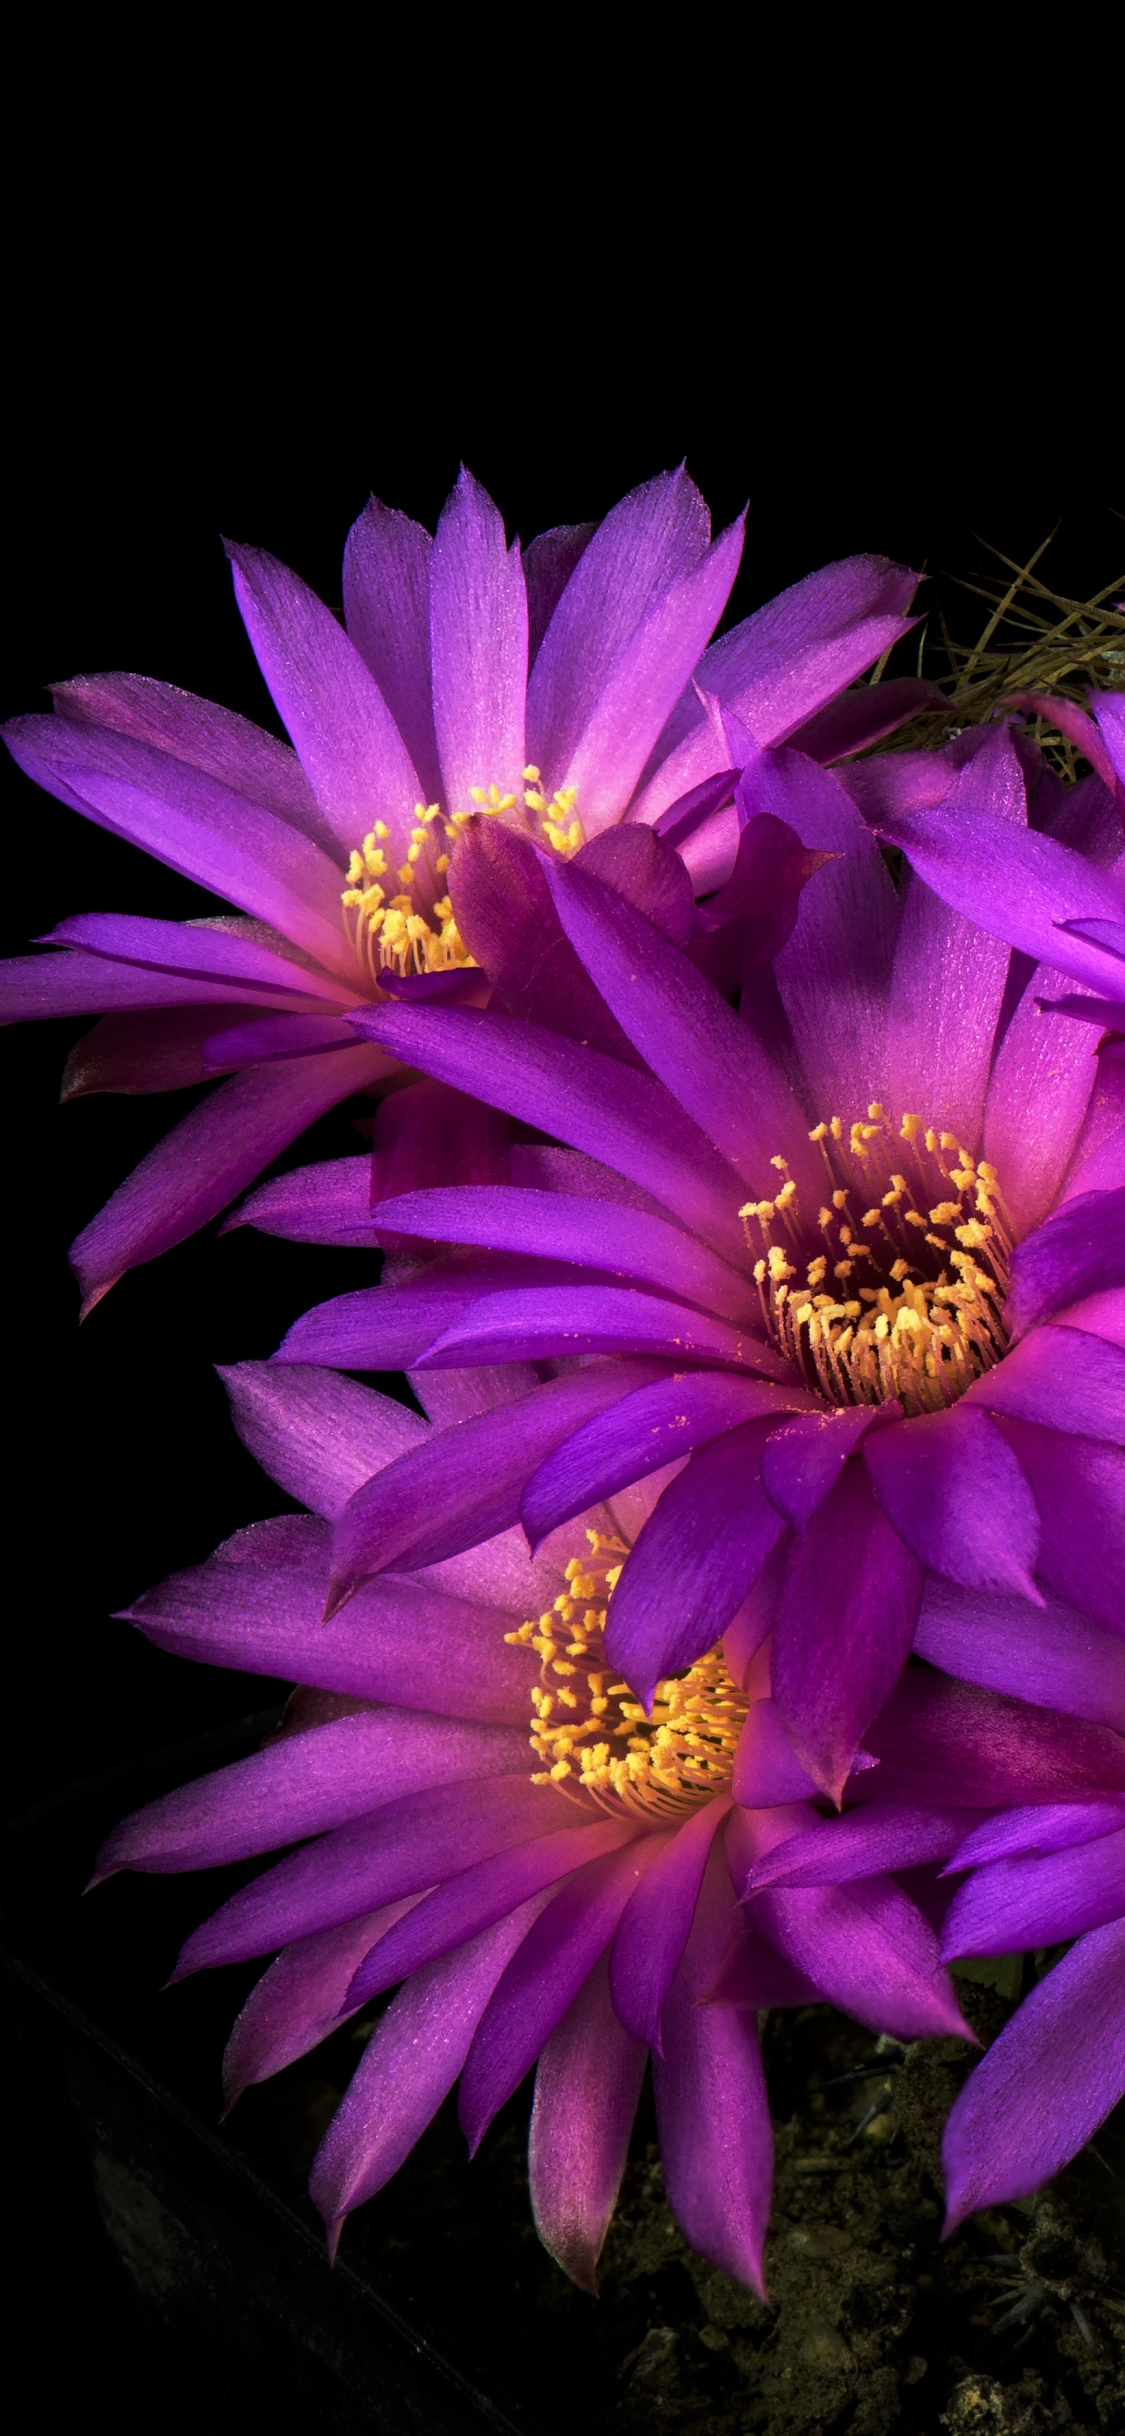 Descarga gratuita de fondo de pantalla para móvil de Cactus, Flores, Flor, Tierra, Flor Purpura, Tierra/naturaleza.